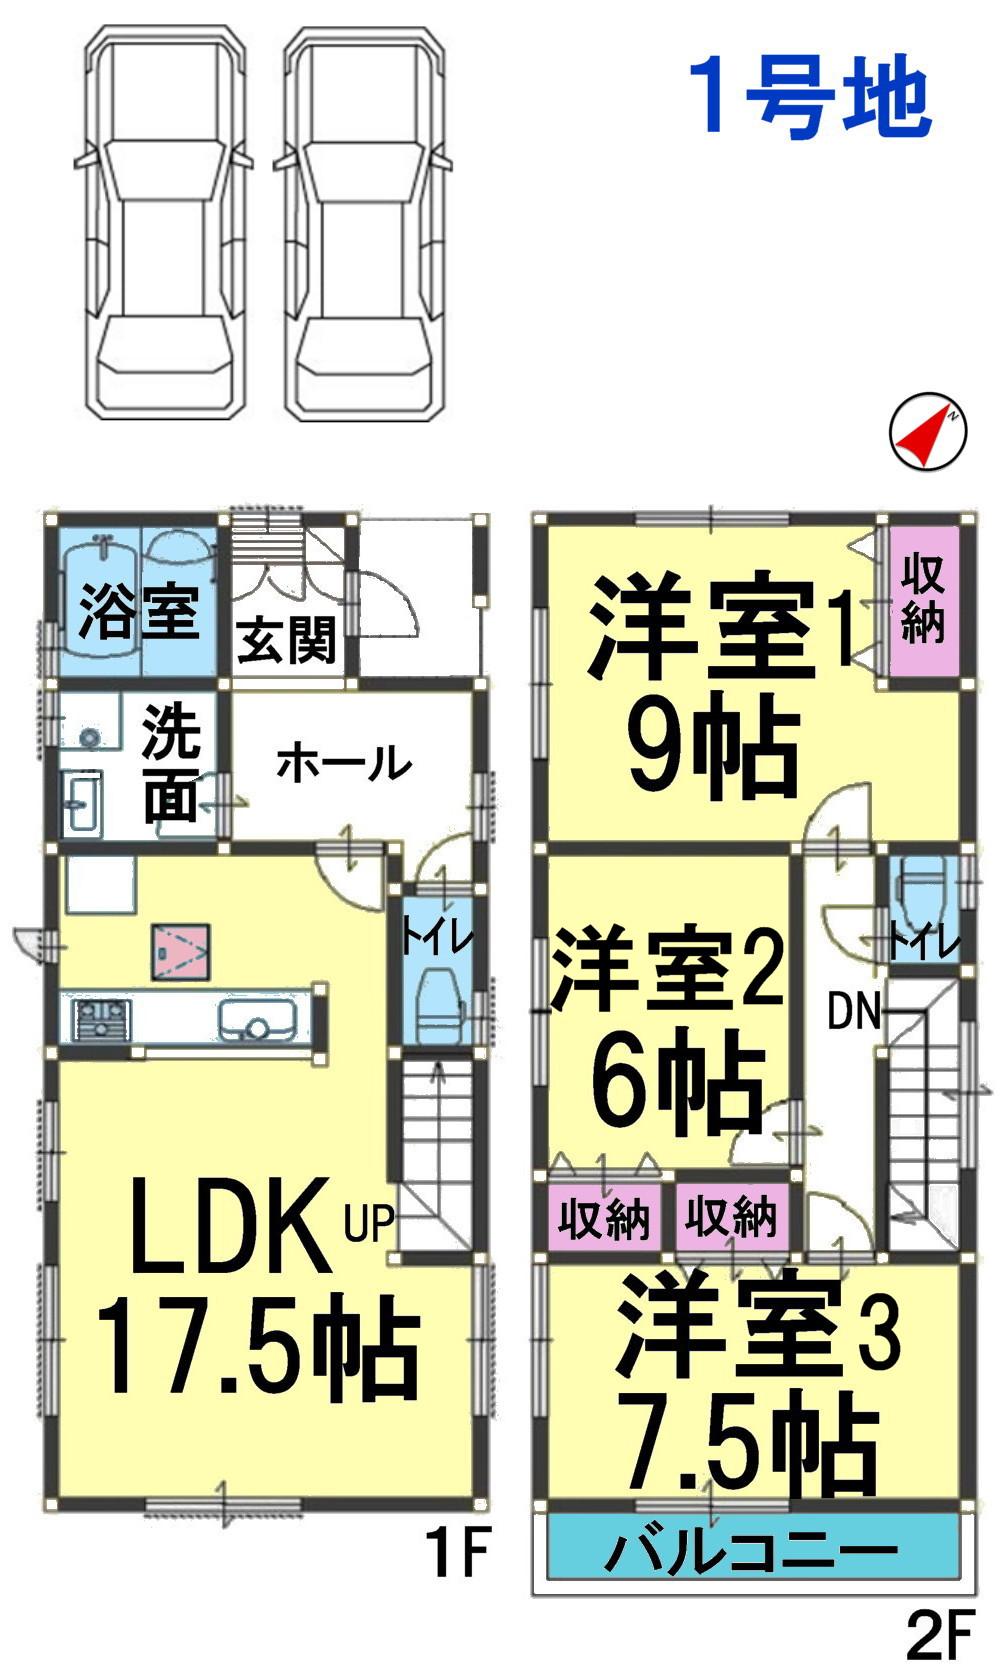 Floor plan. (No. 1 point), Price 29,800,000 yen, 3LDK, Land area 130.79 sq m , Building area 96.88 sq m